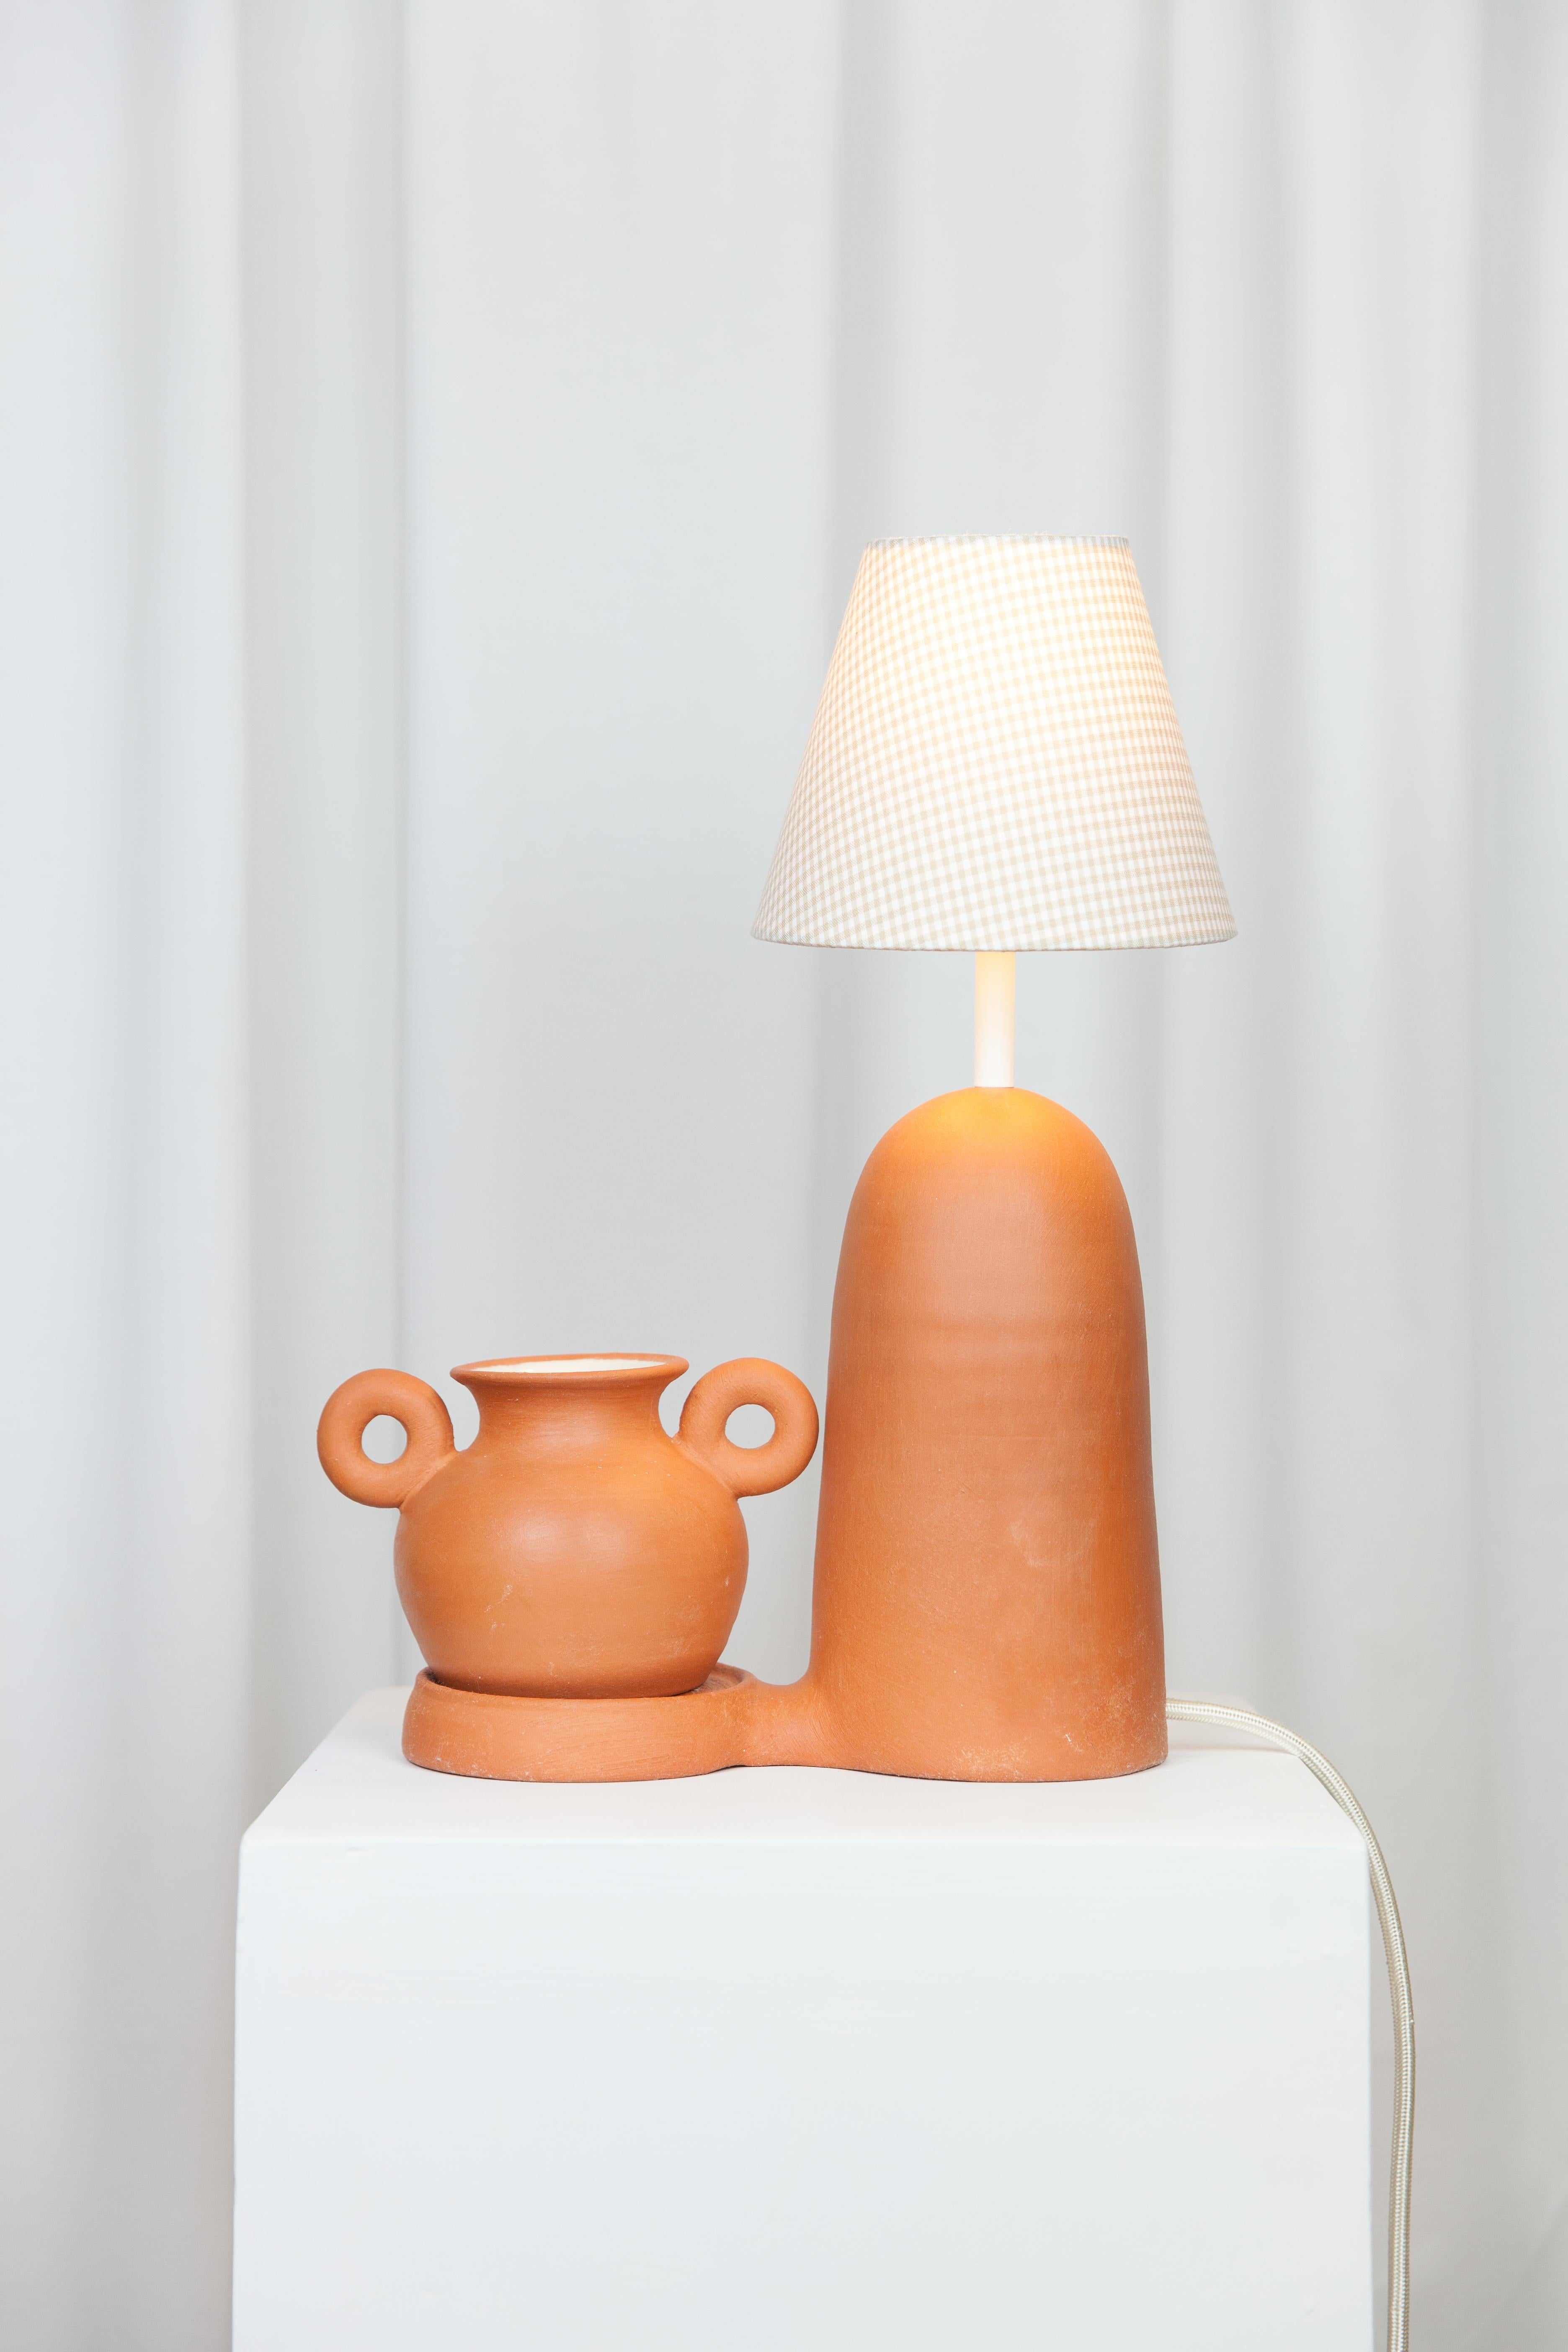 Bloom Yellow Lamp + Vase by Lola Mayeras 2